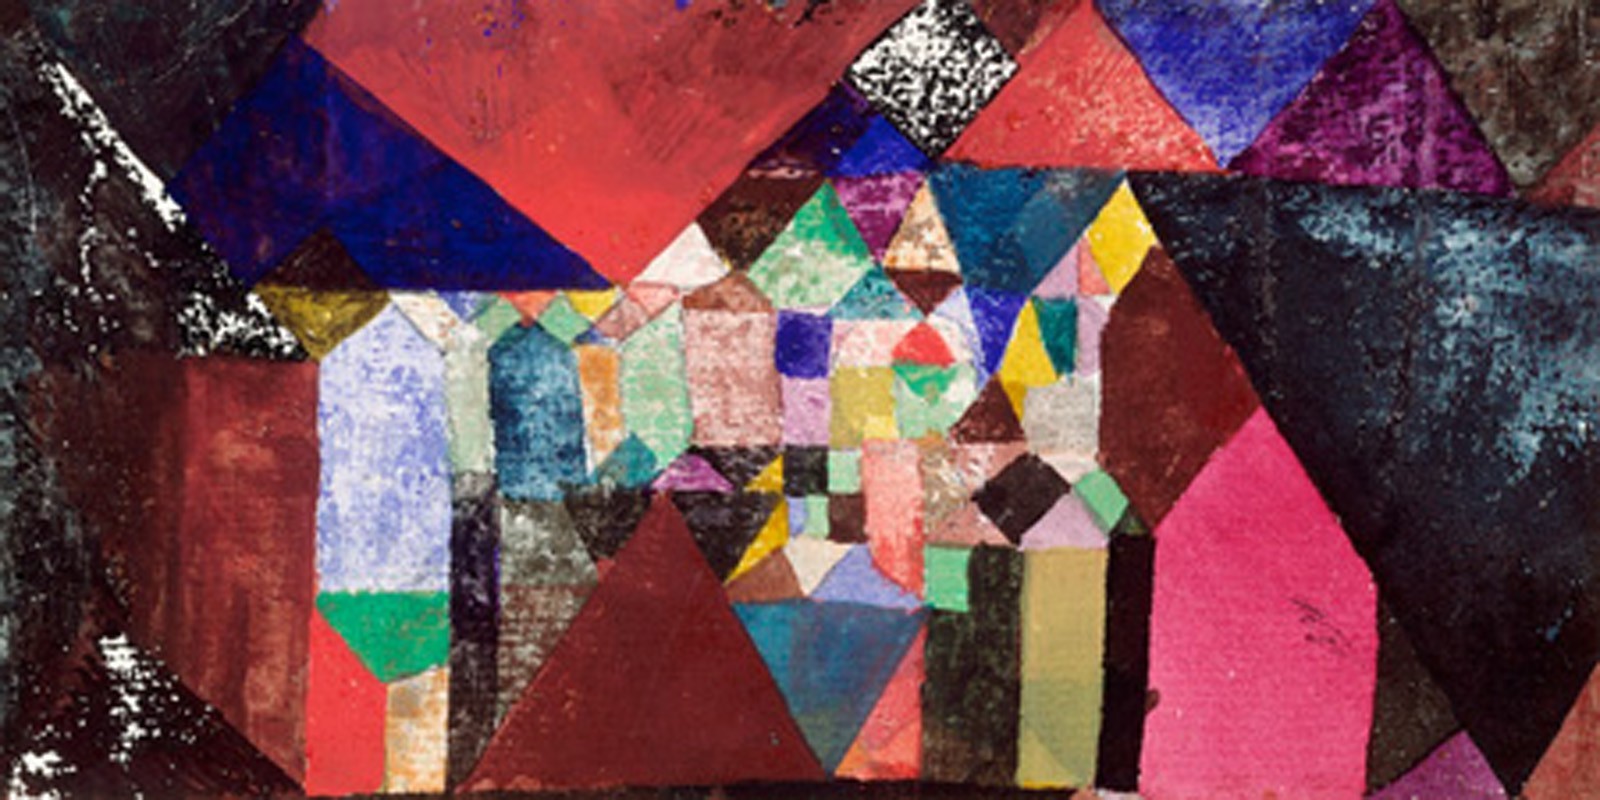 Paul Klee - Municipal Jewel